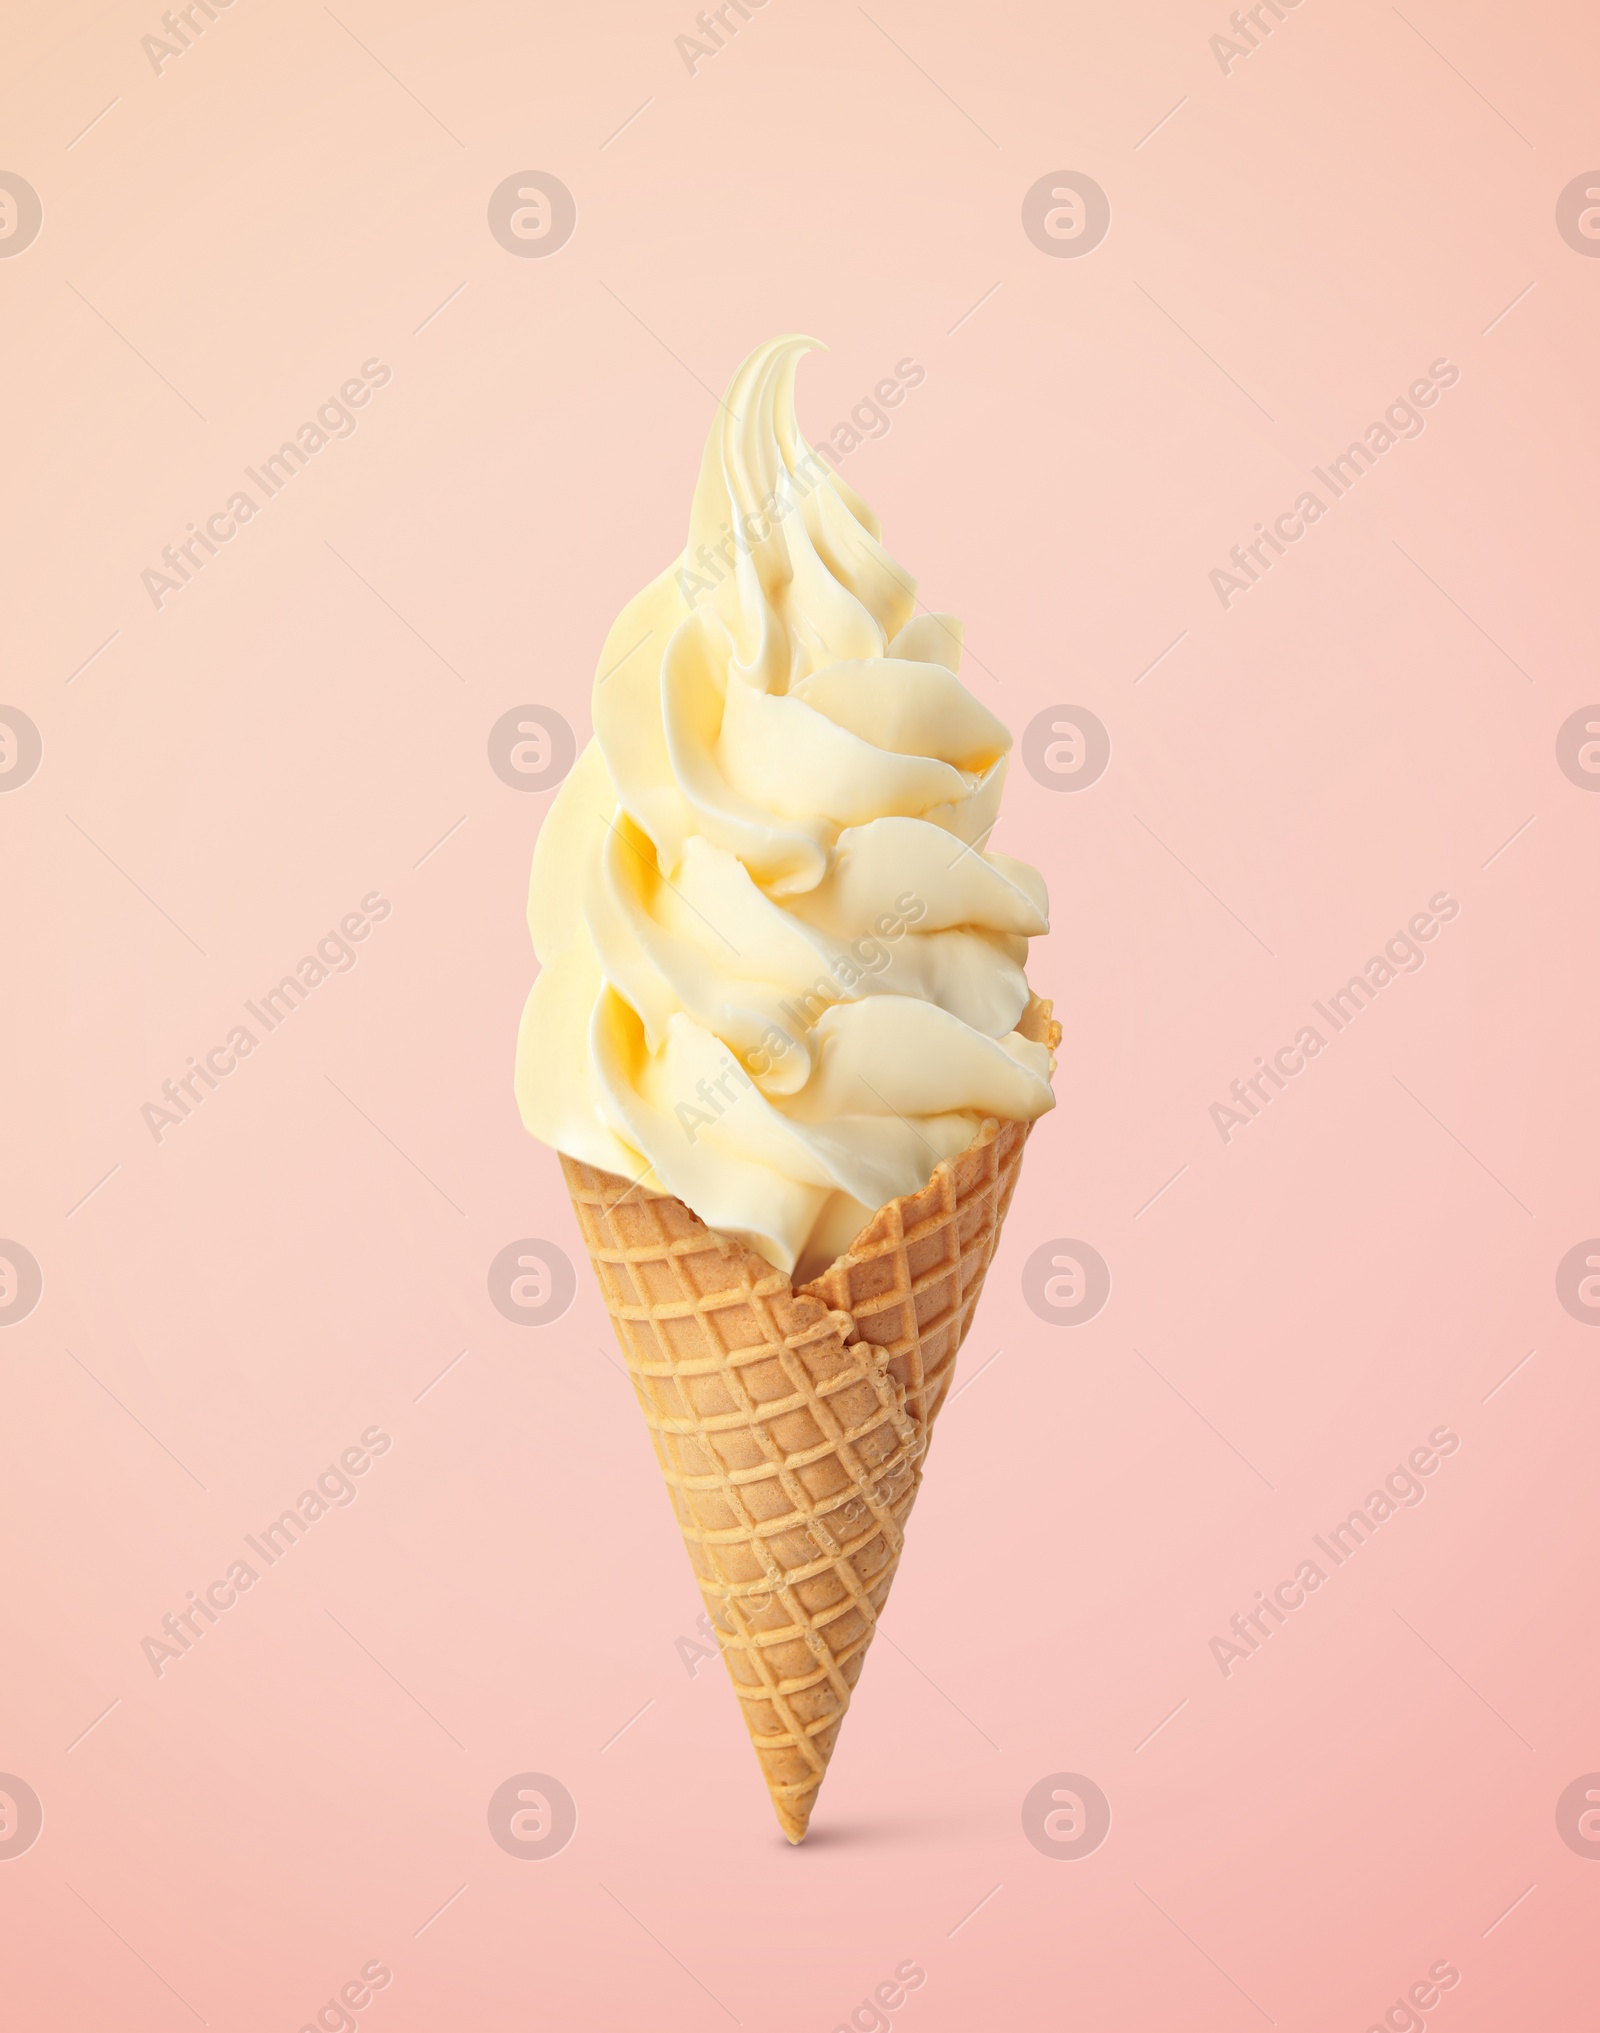 Image of Delicious soft serve vanilla ice cream in crispy cone on pastel pink background